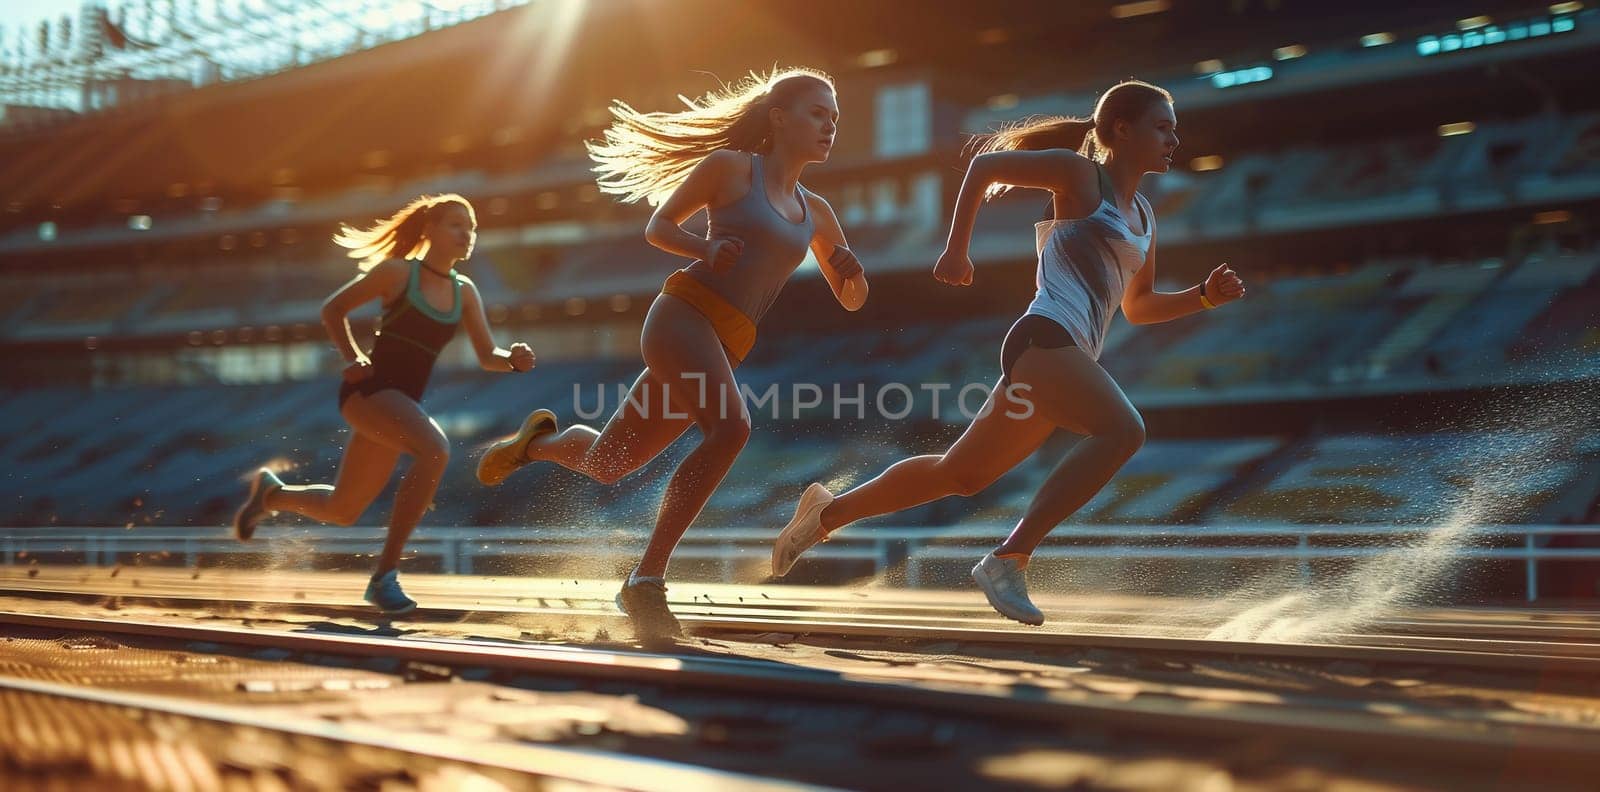 Runner - woman running training.Female fitness concept by Andelov13